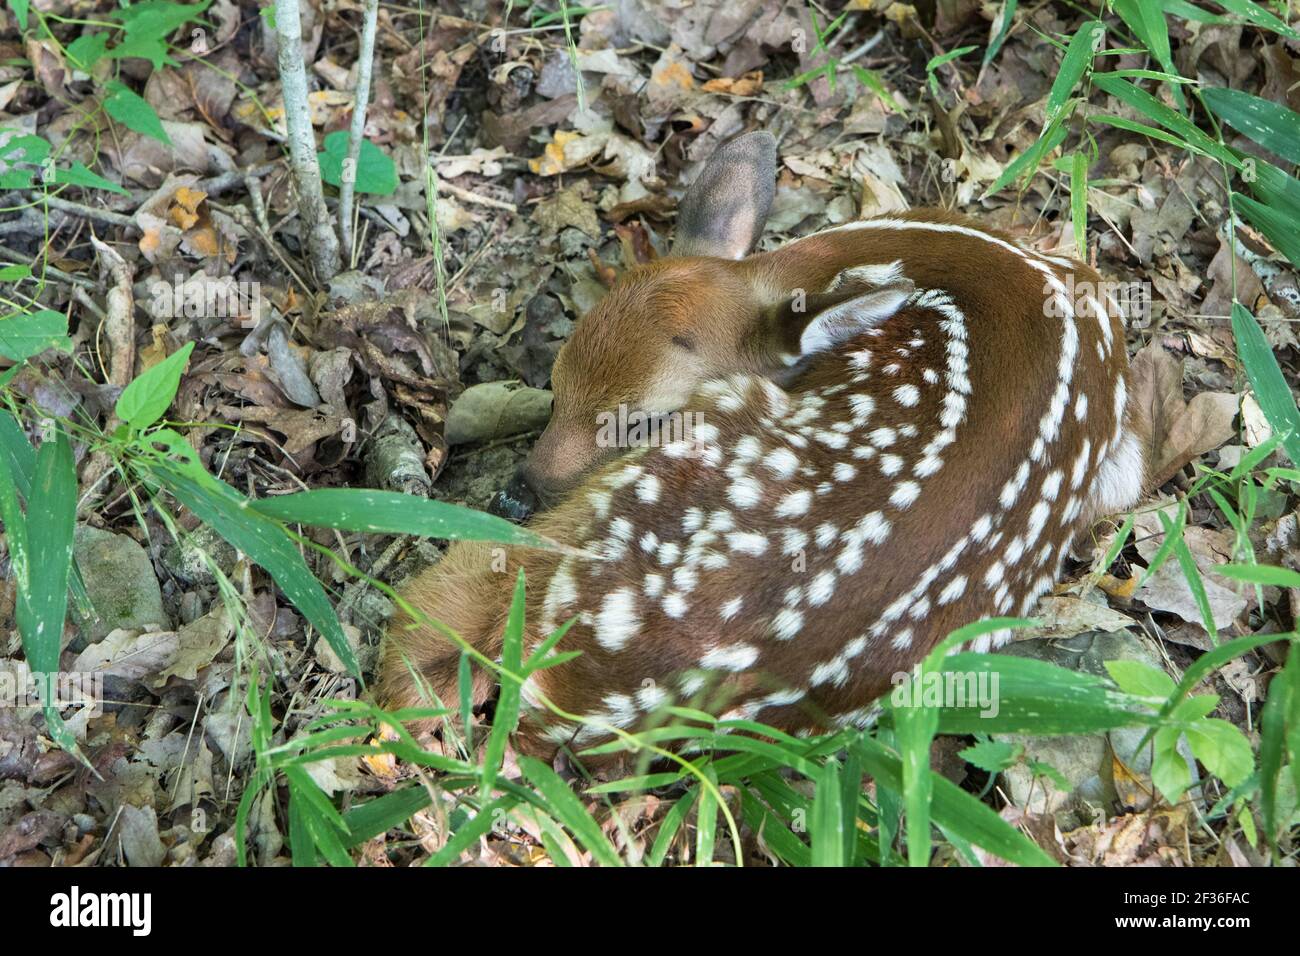 Close-up of a newborn white-tailed deer, Odocoileus virginianus, fawn. Stock Photo